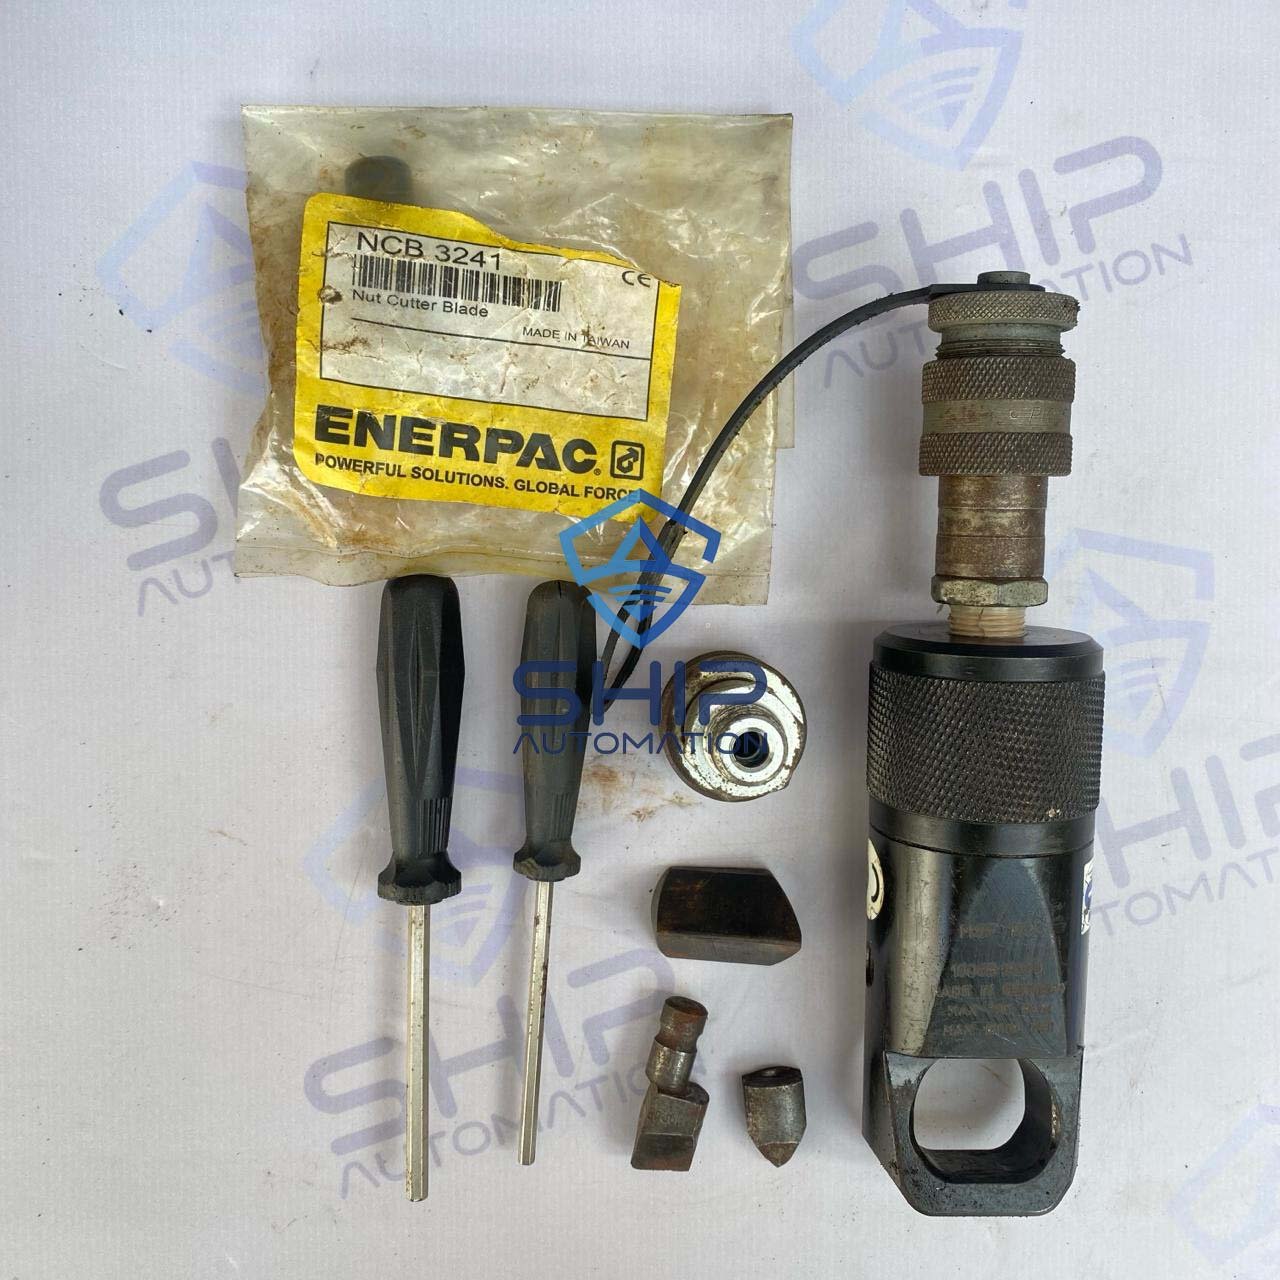 Enerpac NCB 3241 | Nut Splitter Blades